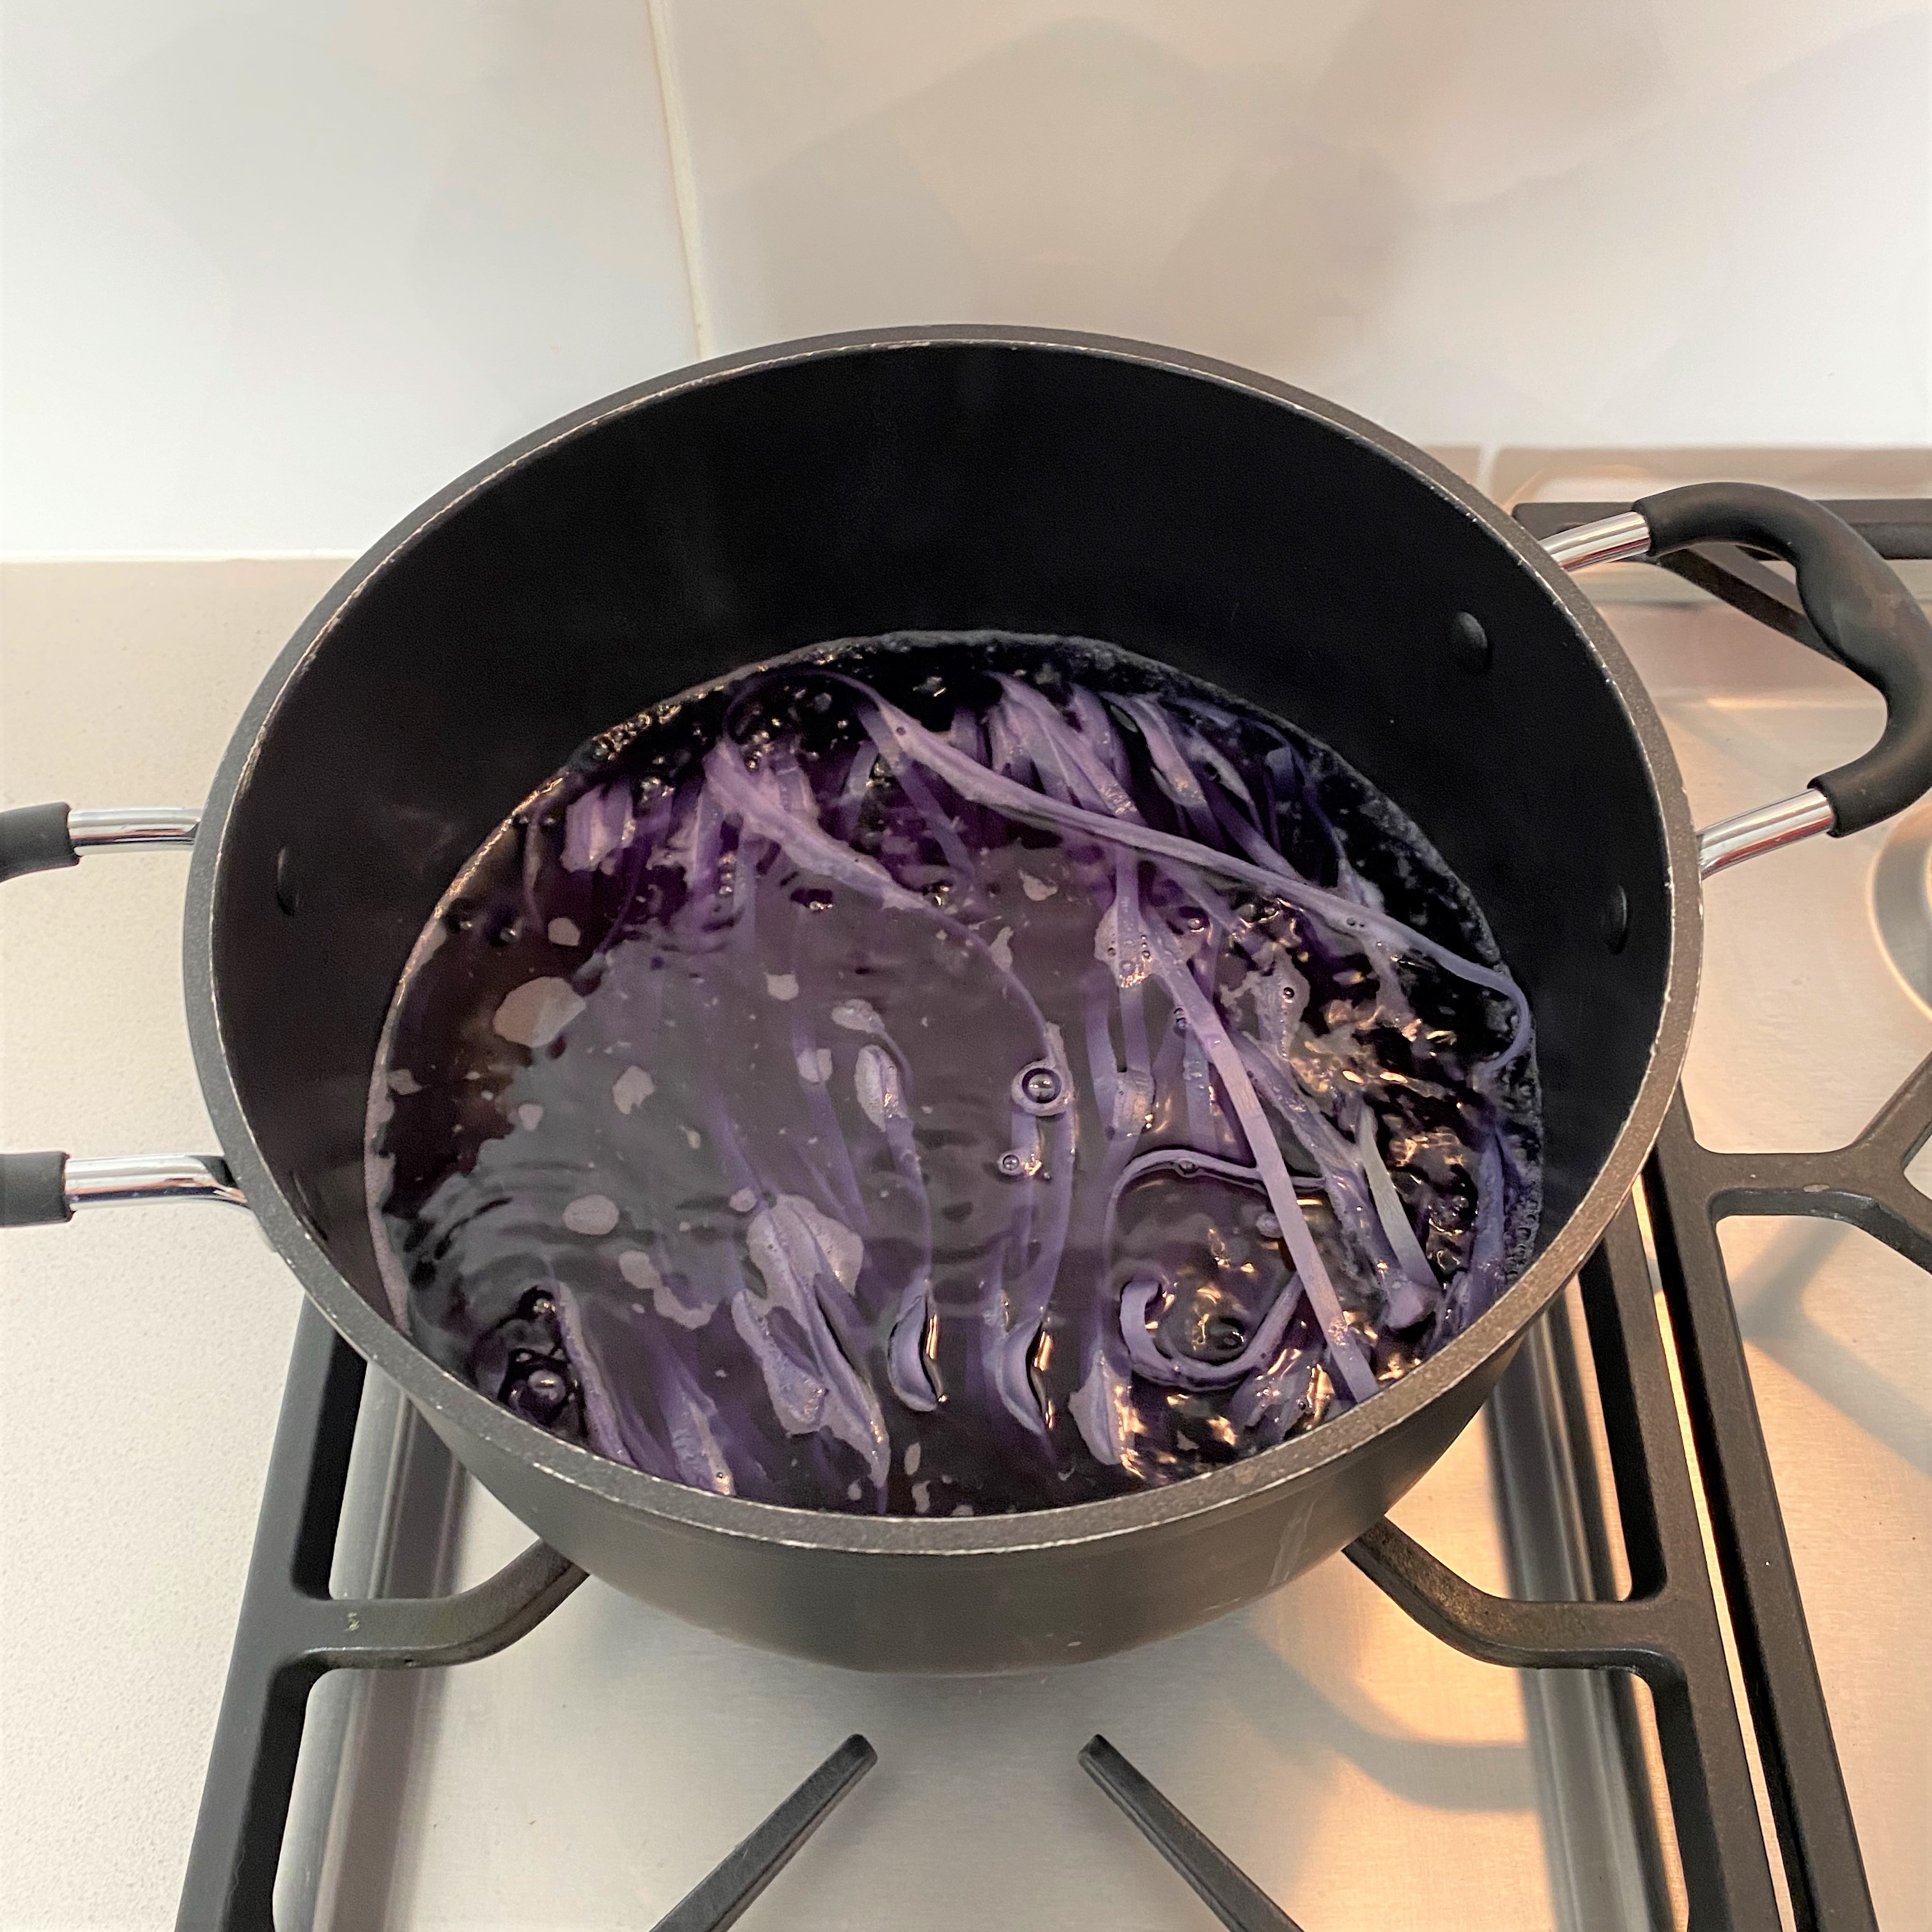 Noodles cooking in purple water